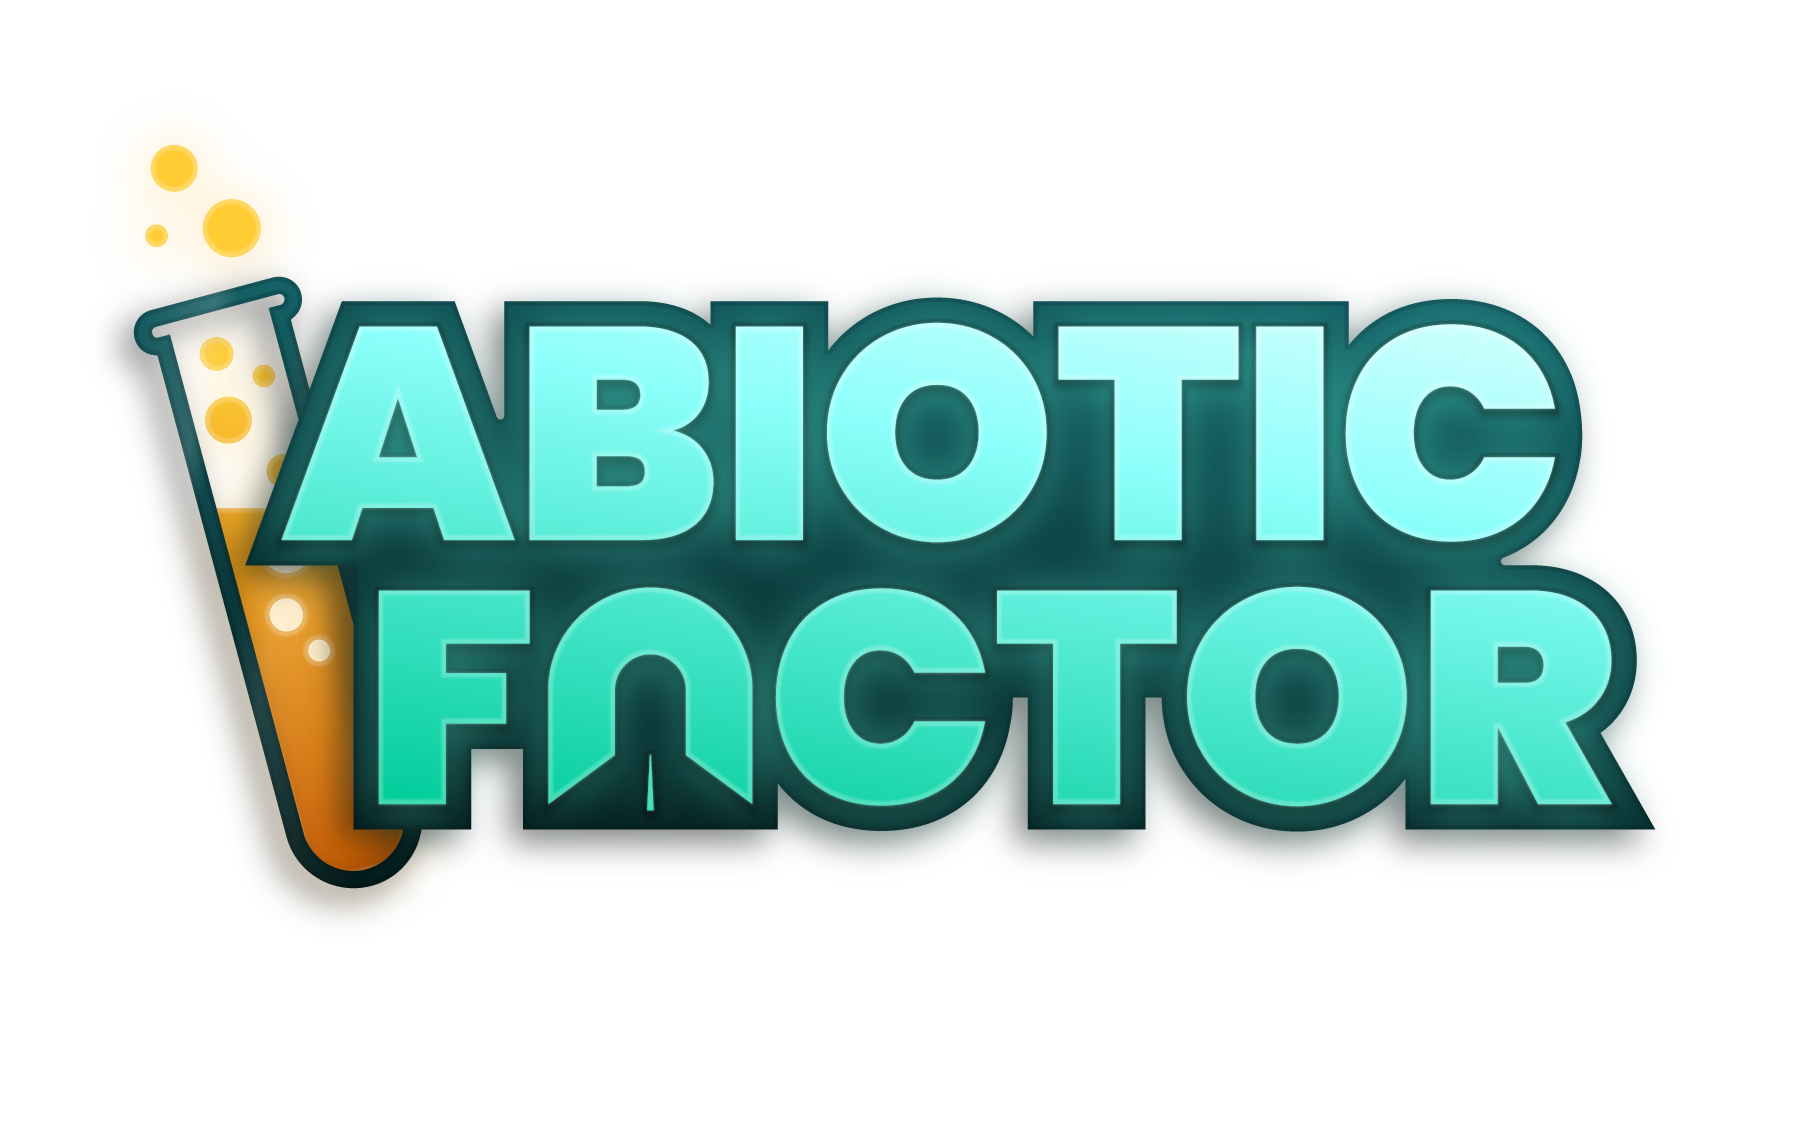 Abiotic Factor game multiplayer server hosting lag-free